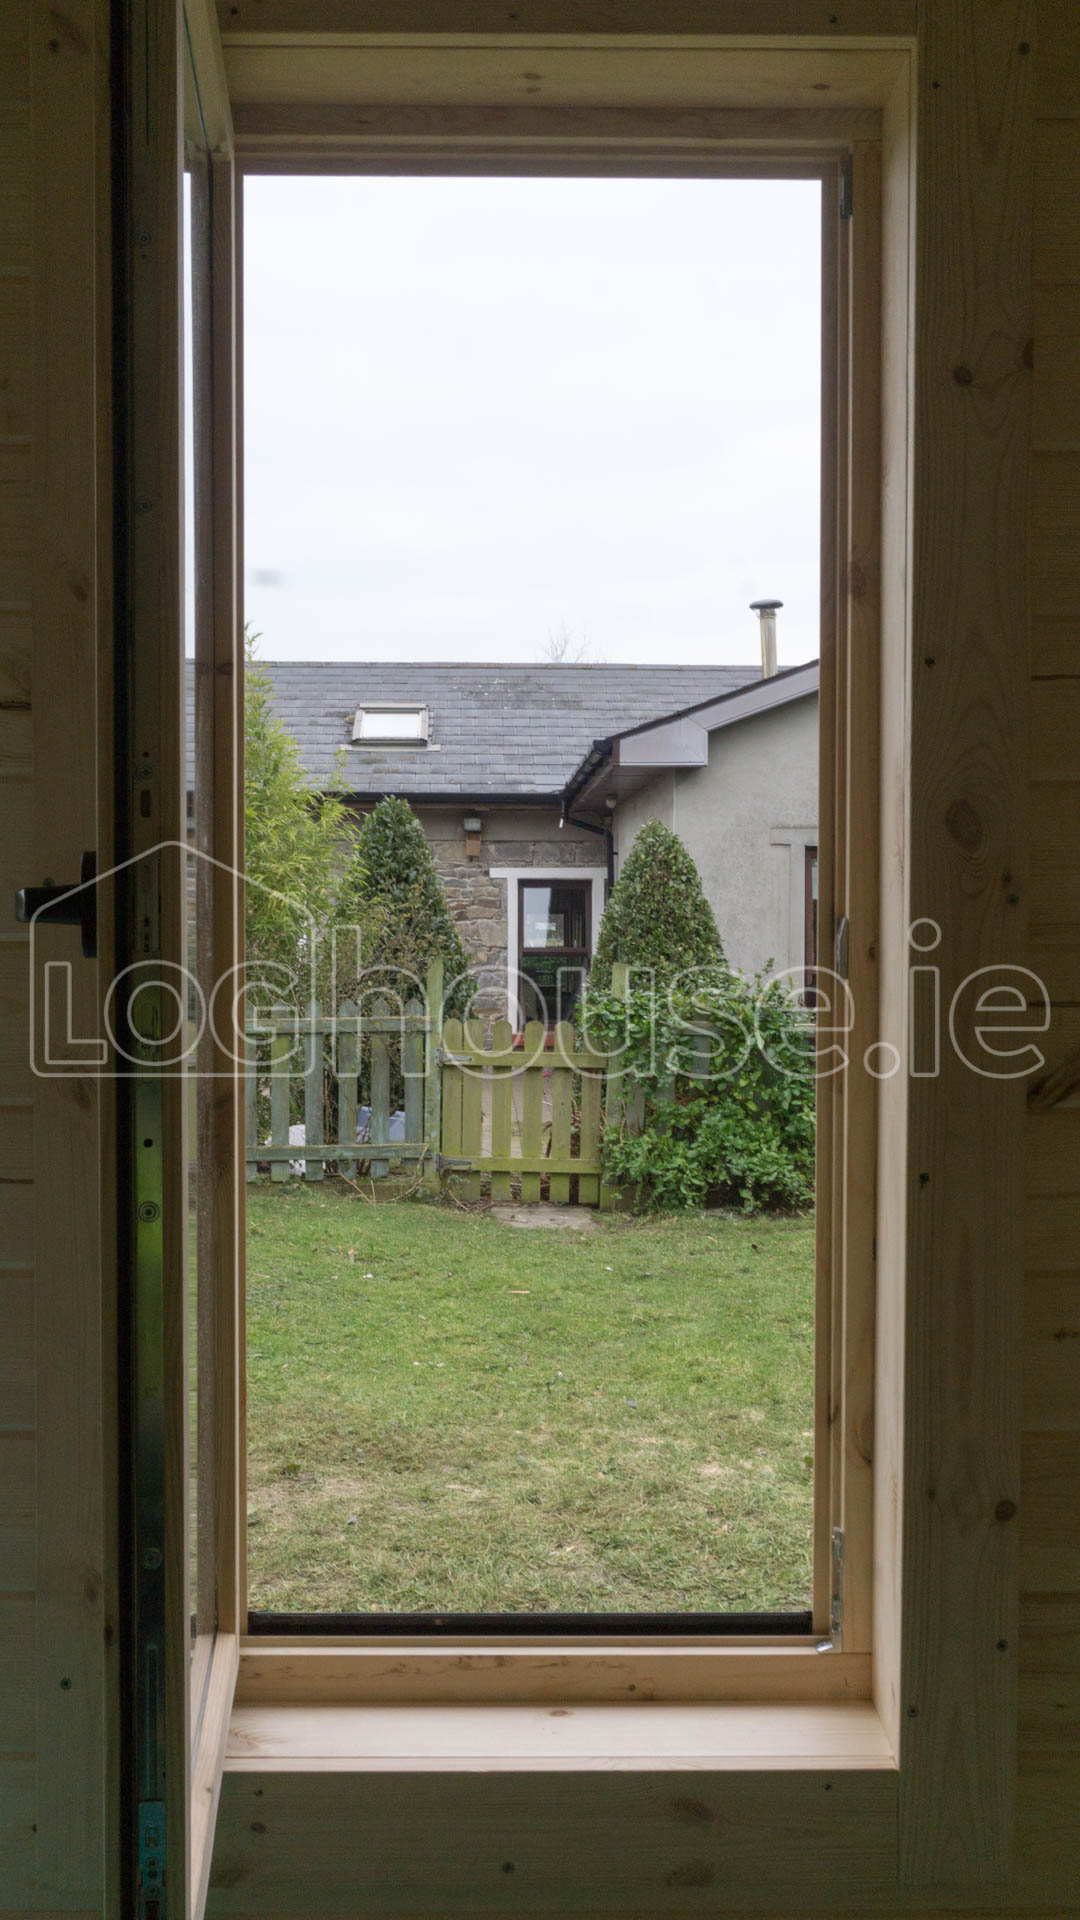 Loghouse Living Type Windows & Doors